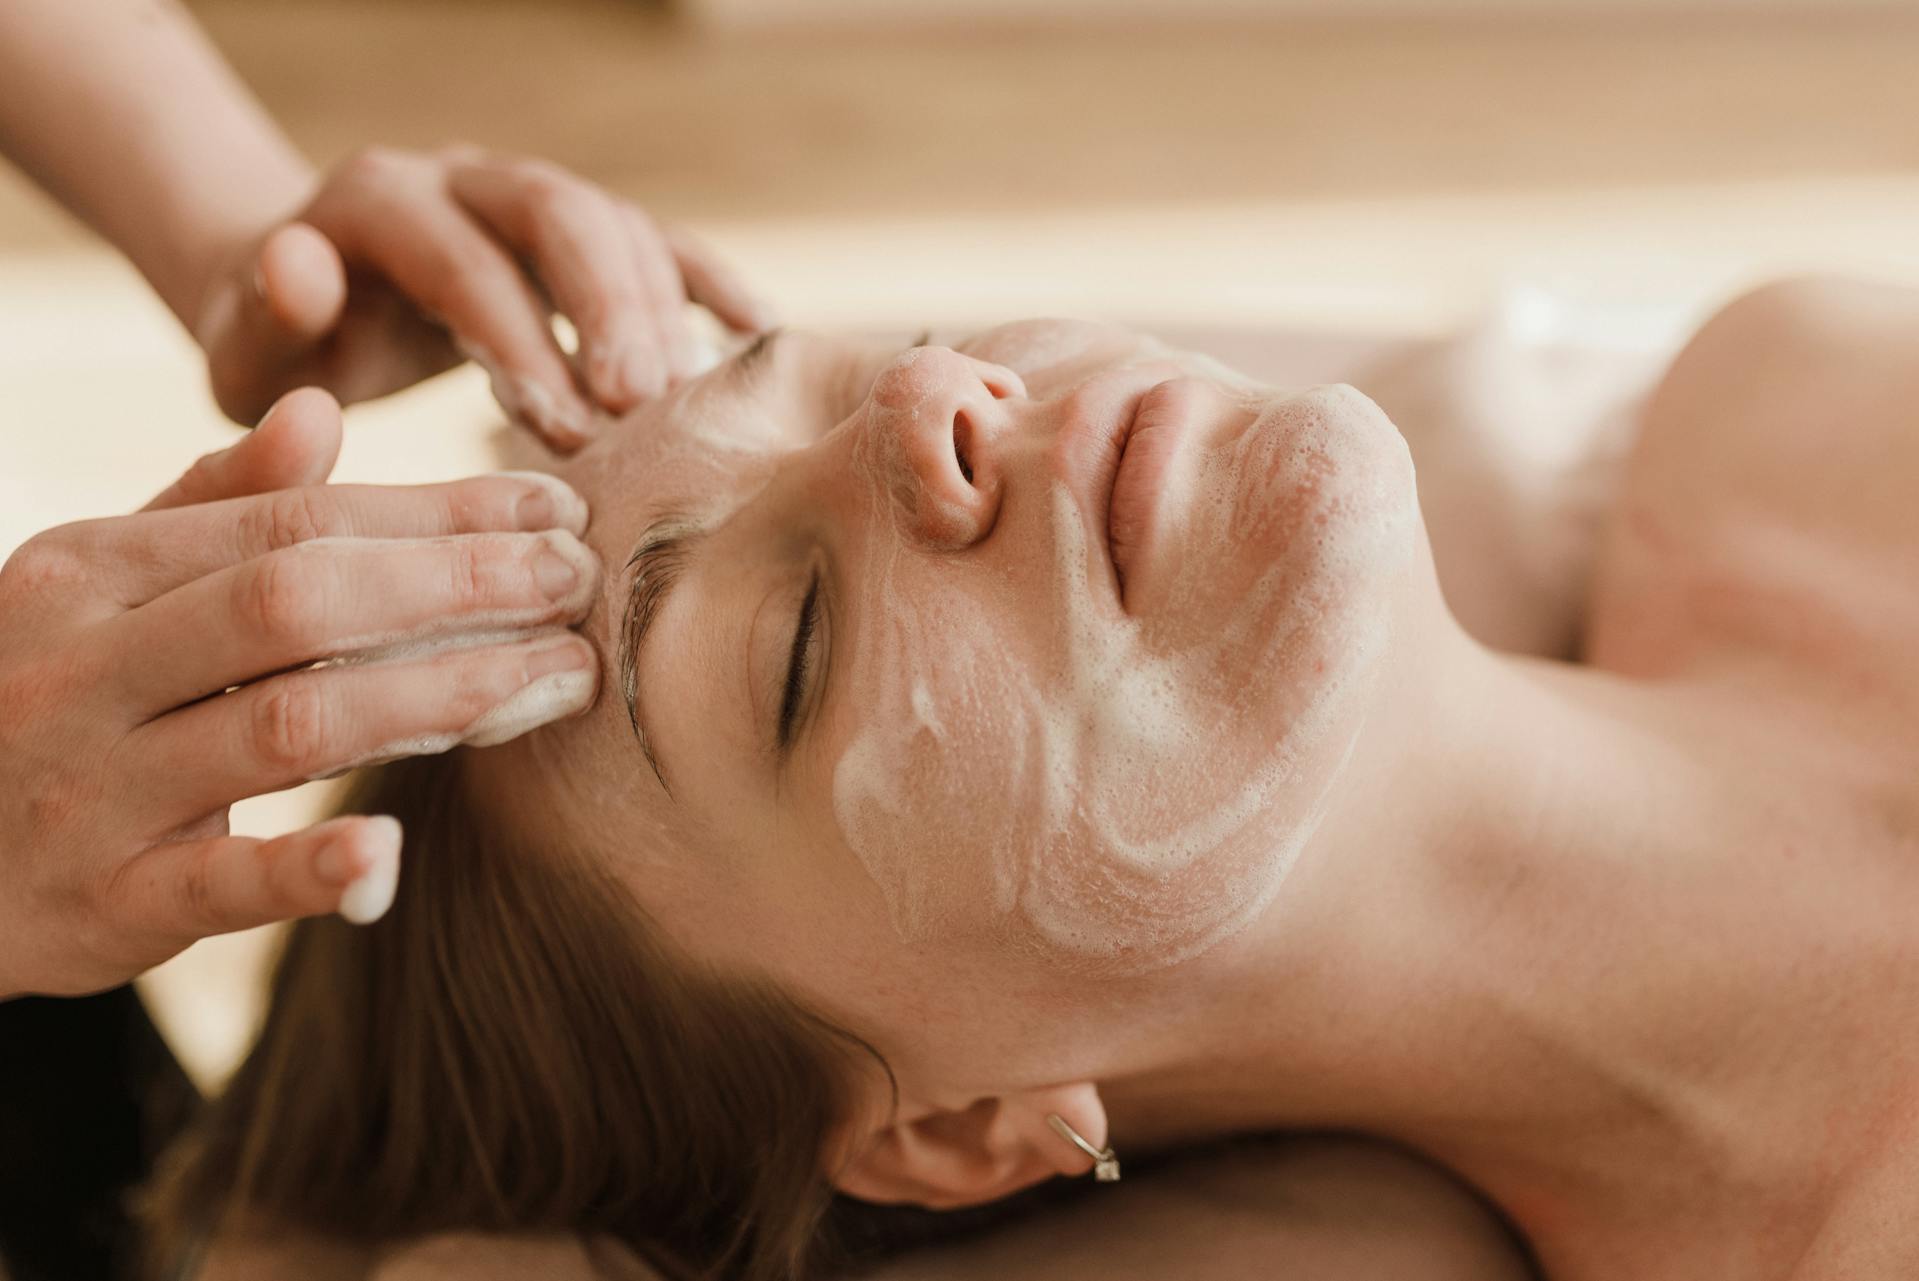 A Woman Having a Facial Treatment - Photo by Arina Krasnikova: https://www.pexels.com/photo/a-woman-having-a-facial-treatment-6663368/